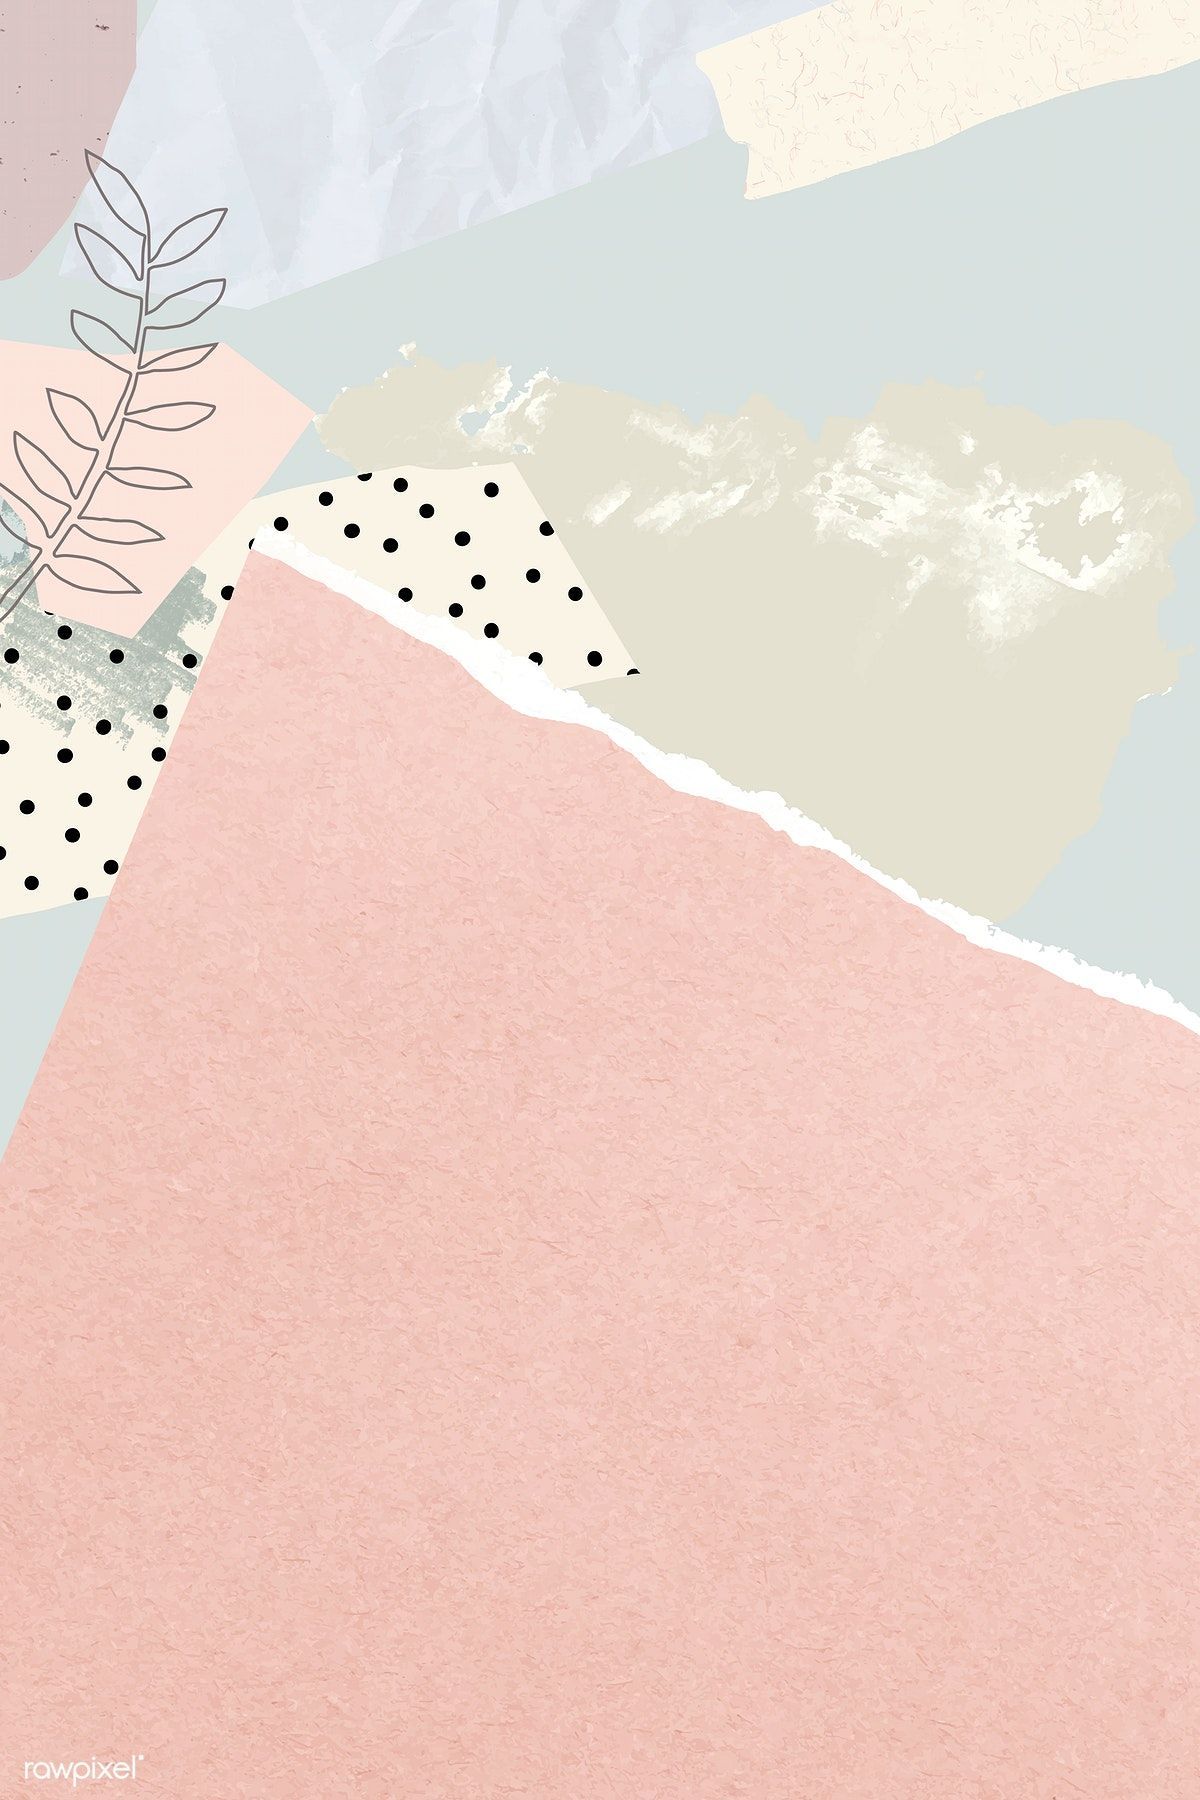 Download premium vector of Blank pink ripped notepaper vector 1208210. Instagram wallpaper, iPhone background wallpaper, Watercolor wallpaper